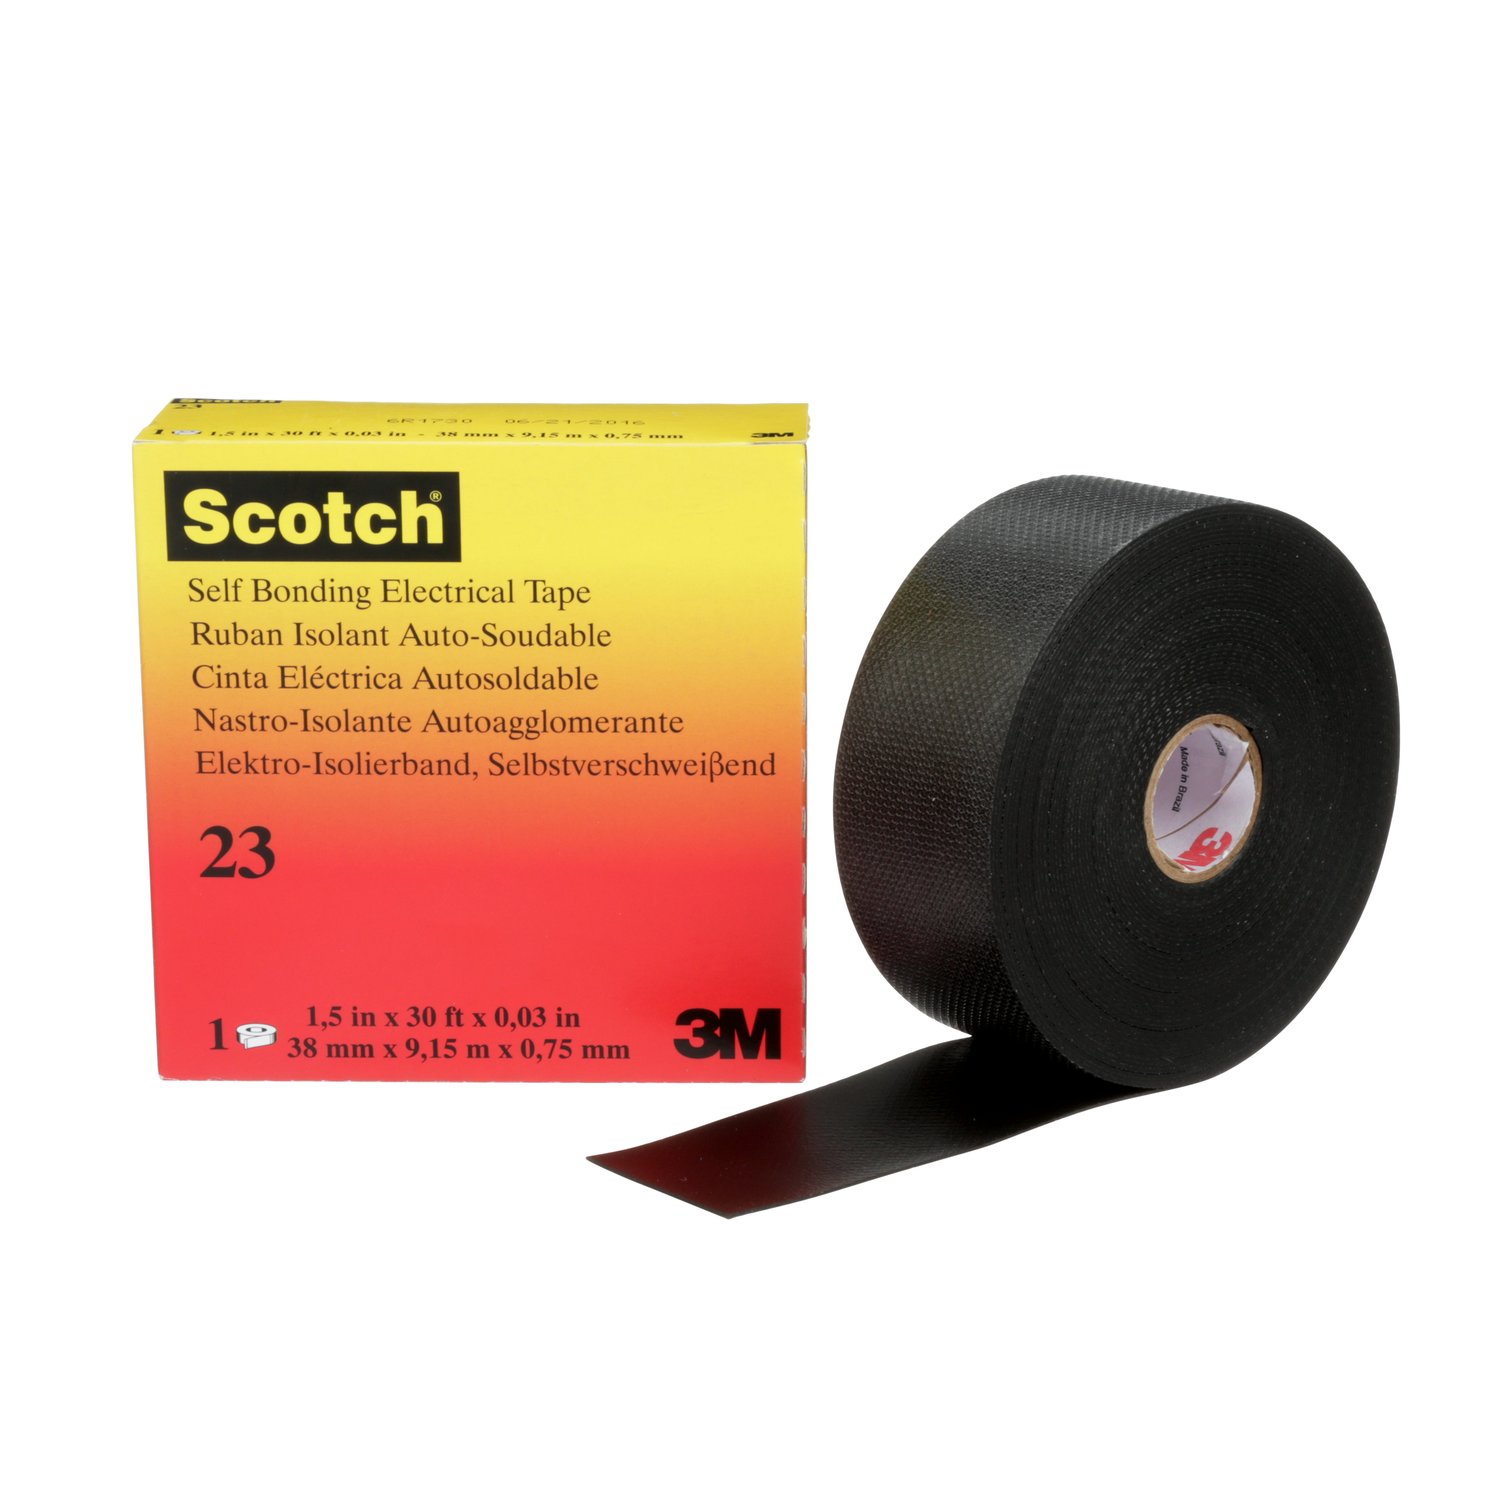 7000138529 - Scotch Rubber Splicing Tape 23, 1-1/2 in x 30 ft, Black, 1 roll/carton,
20 rolls/Case